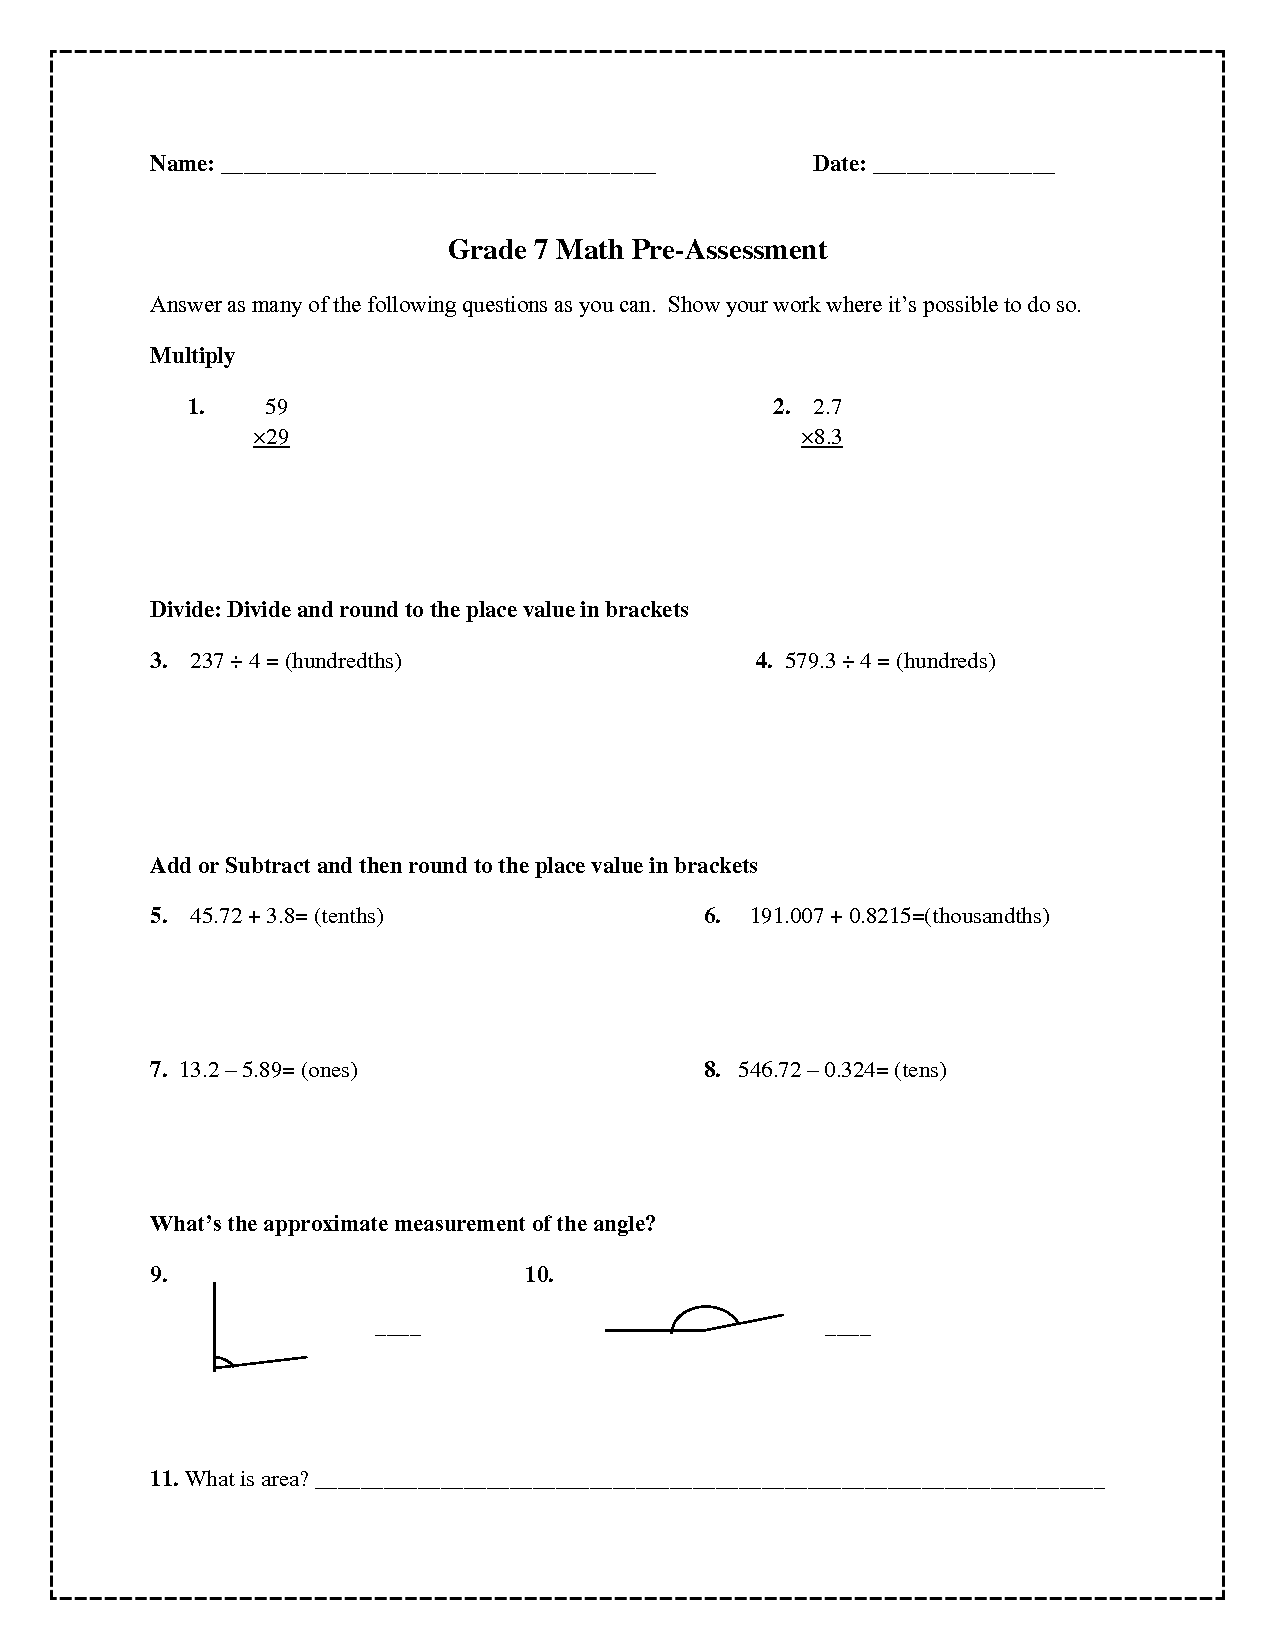 7th Grade Math Assessment Image